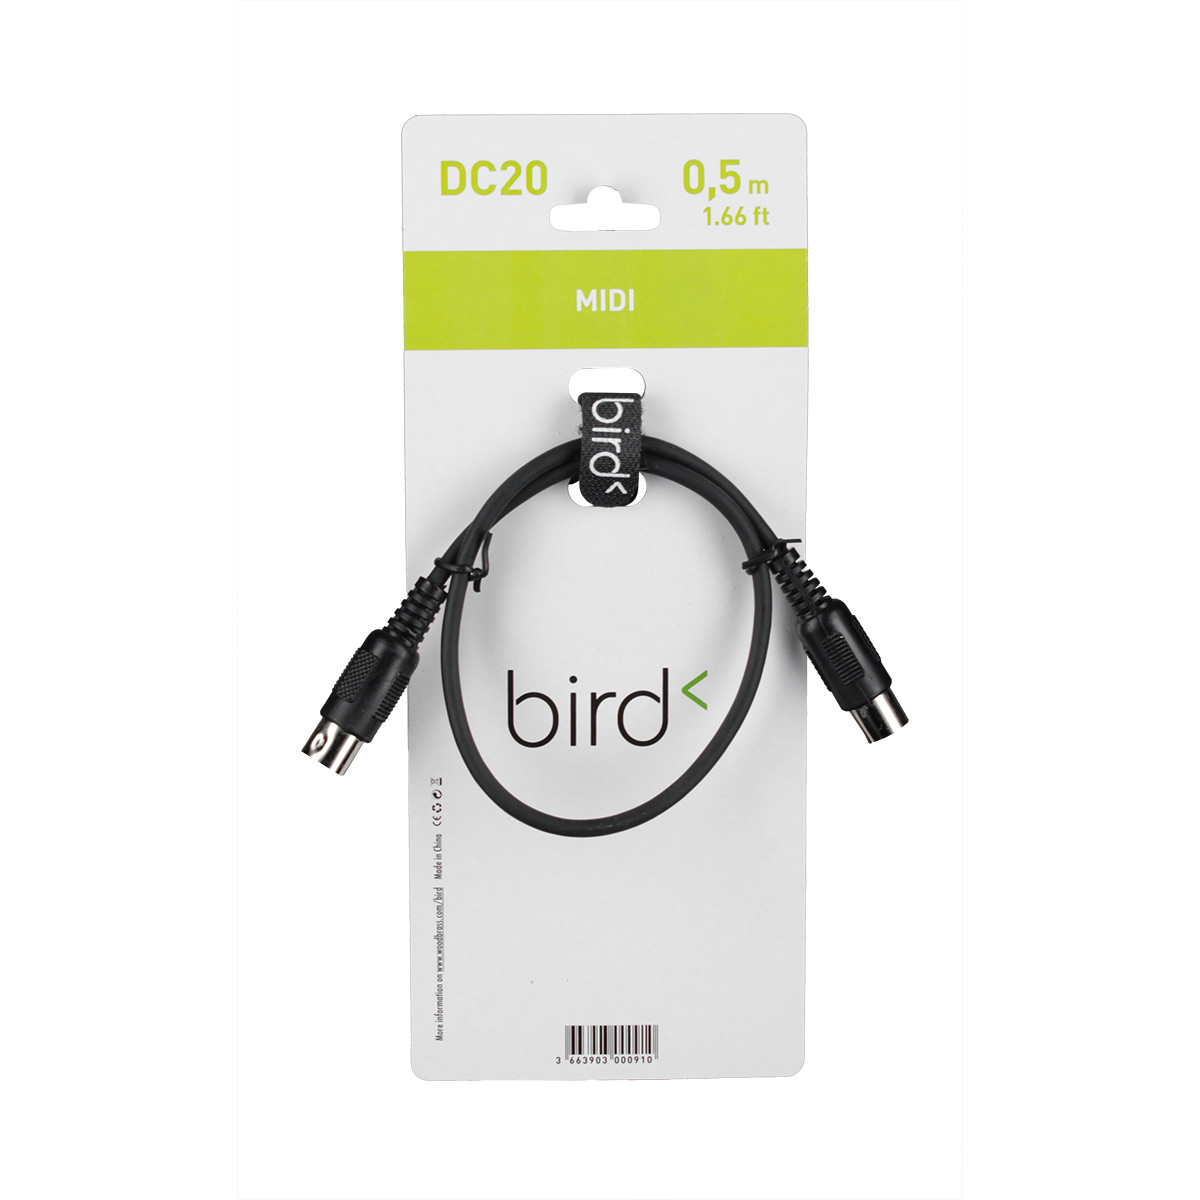 BIRD DC20 - MIDI - 1.66FT